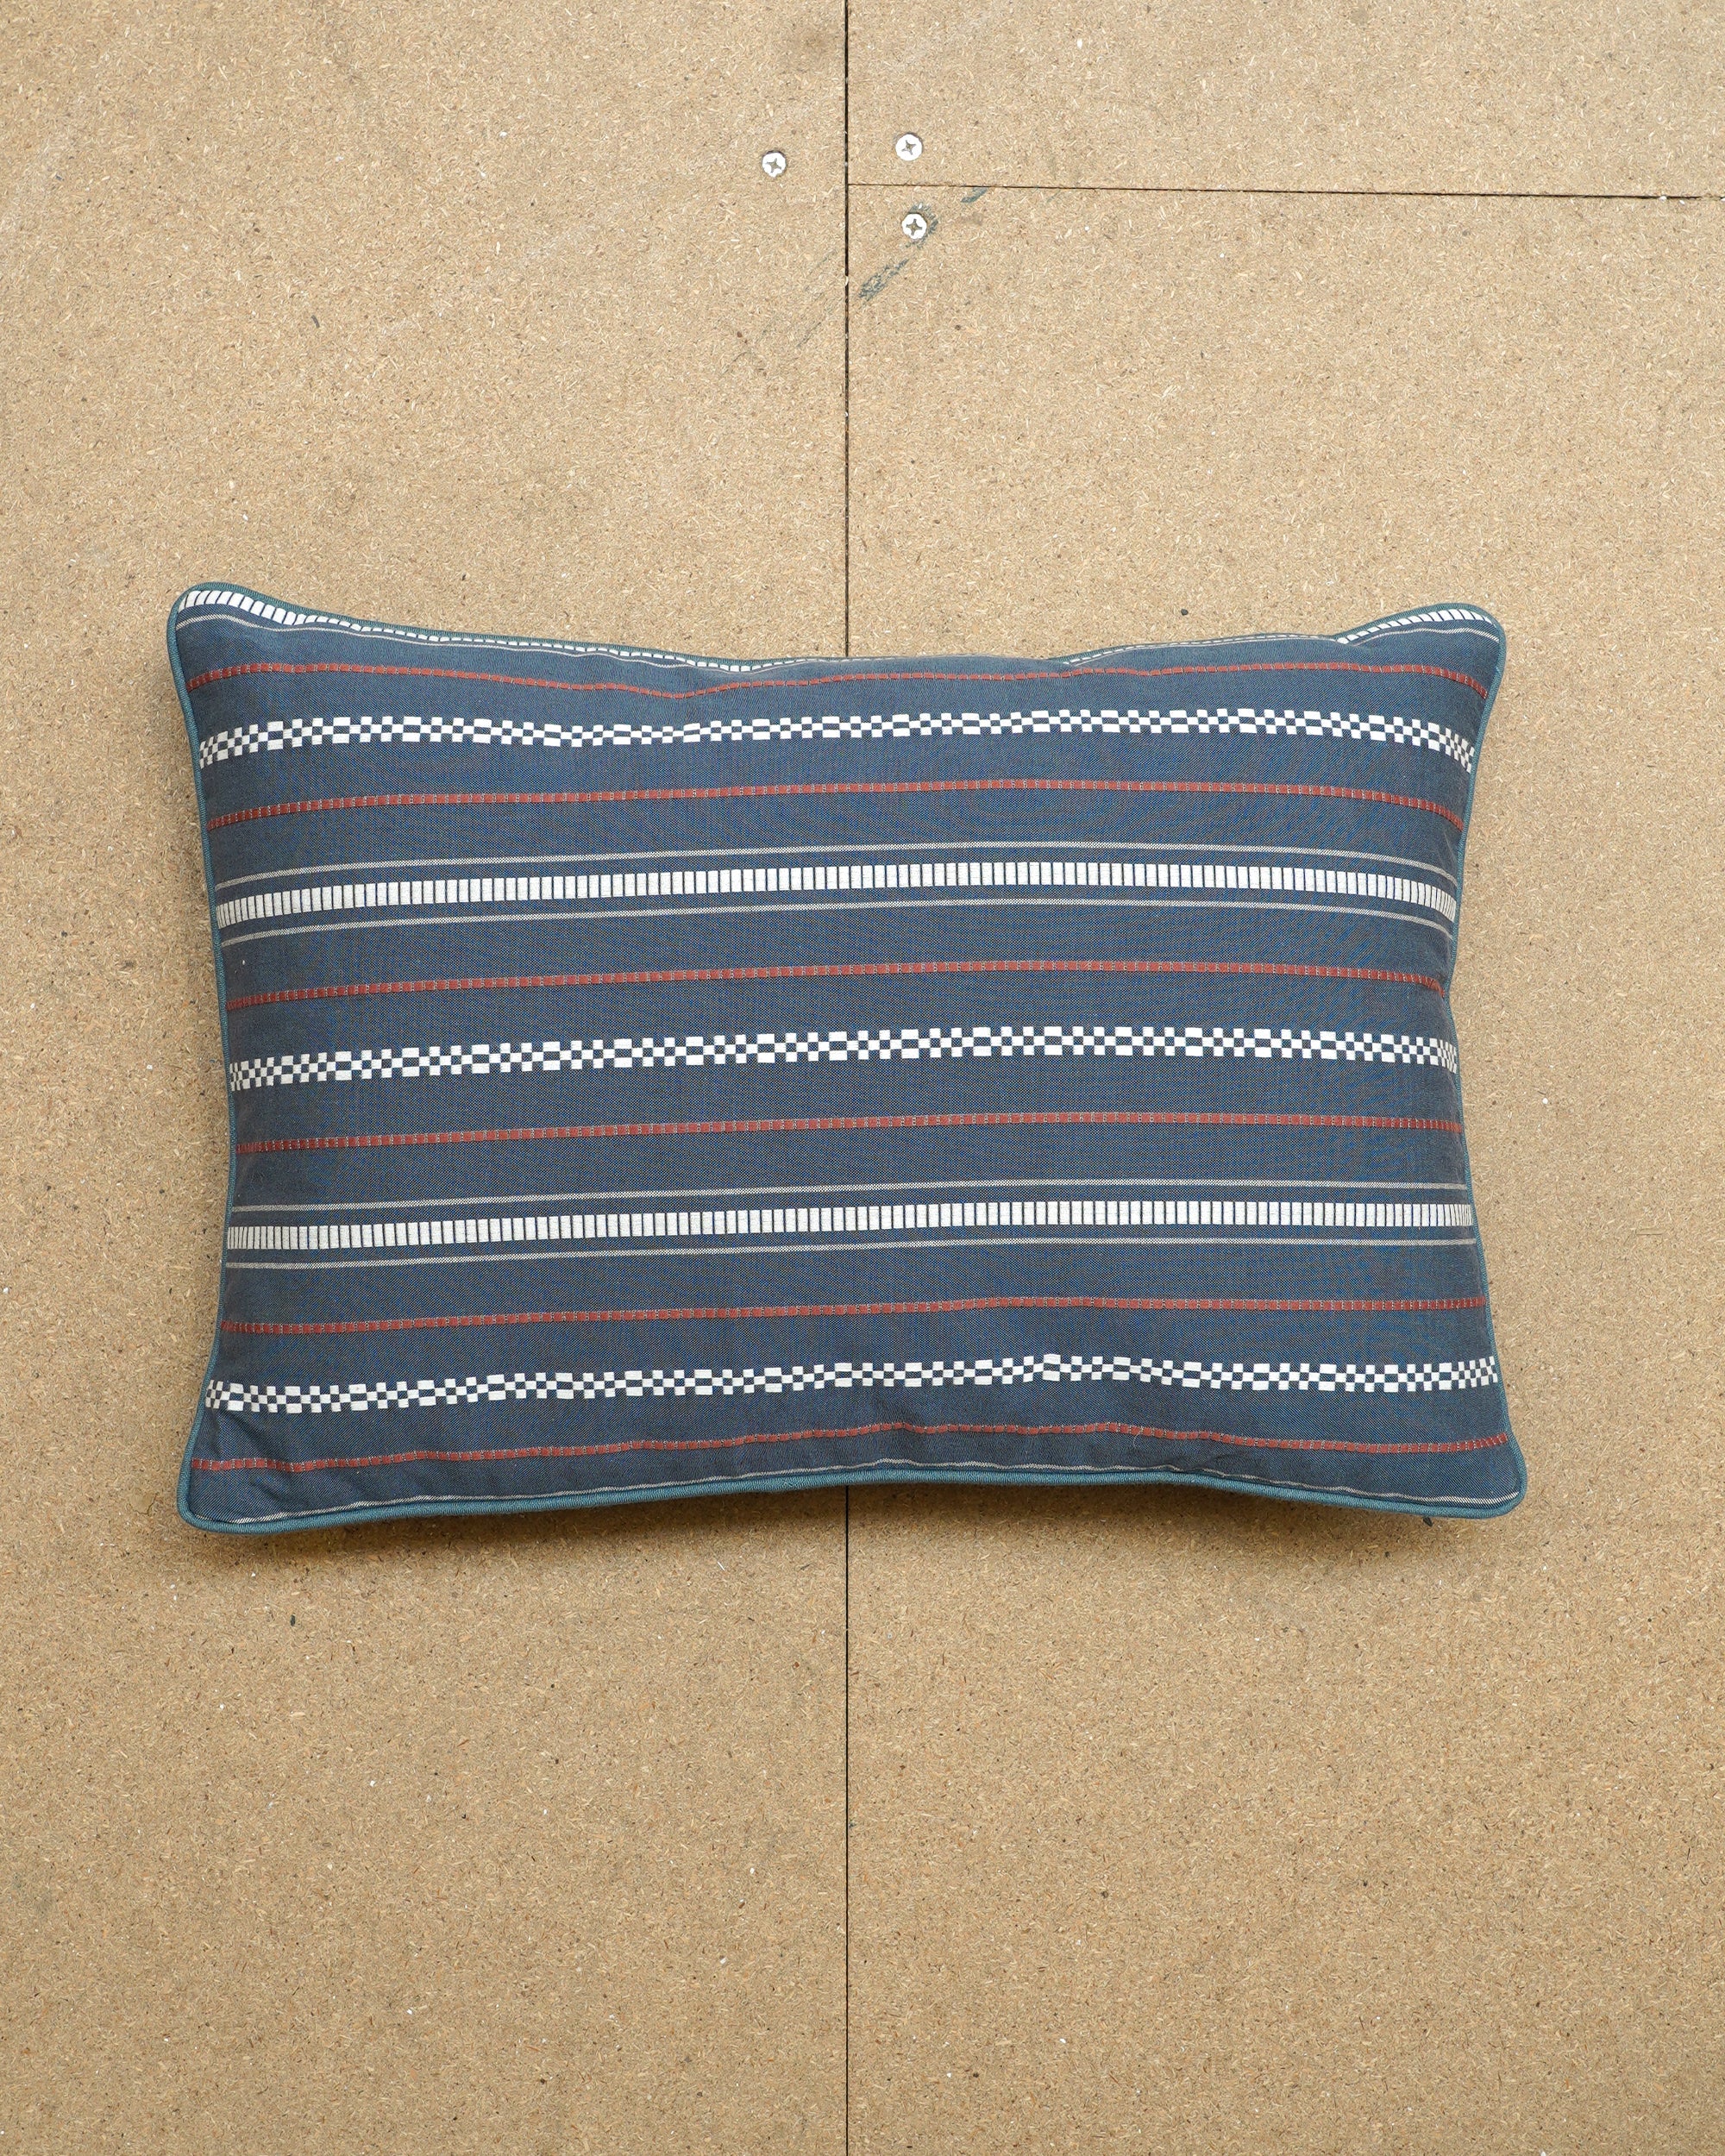 Woven Horizontal Stripe Rectangular Cushion - Indigo Blue